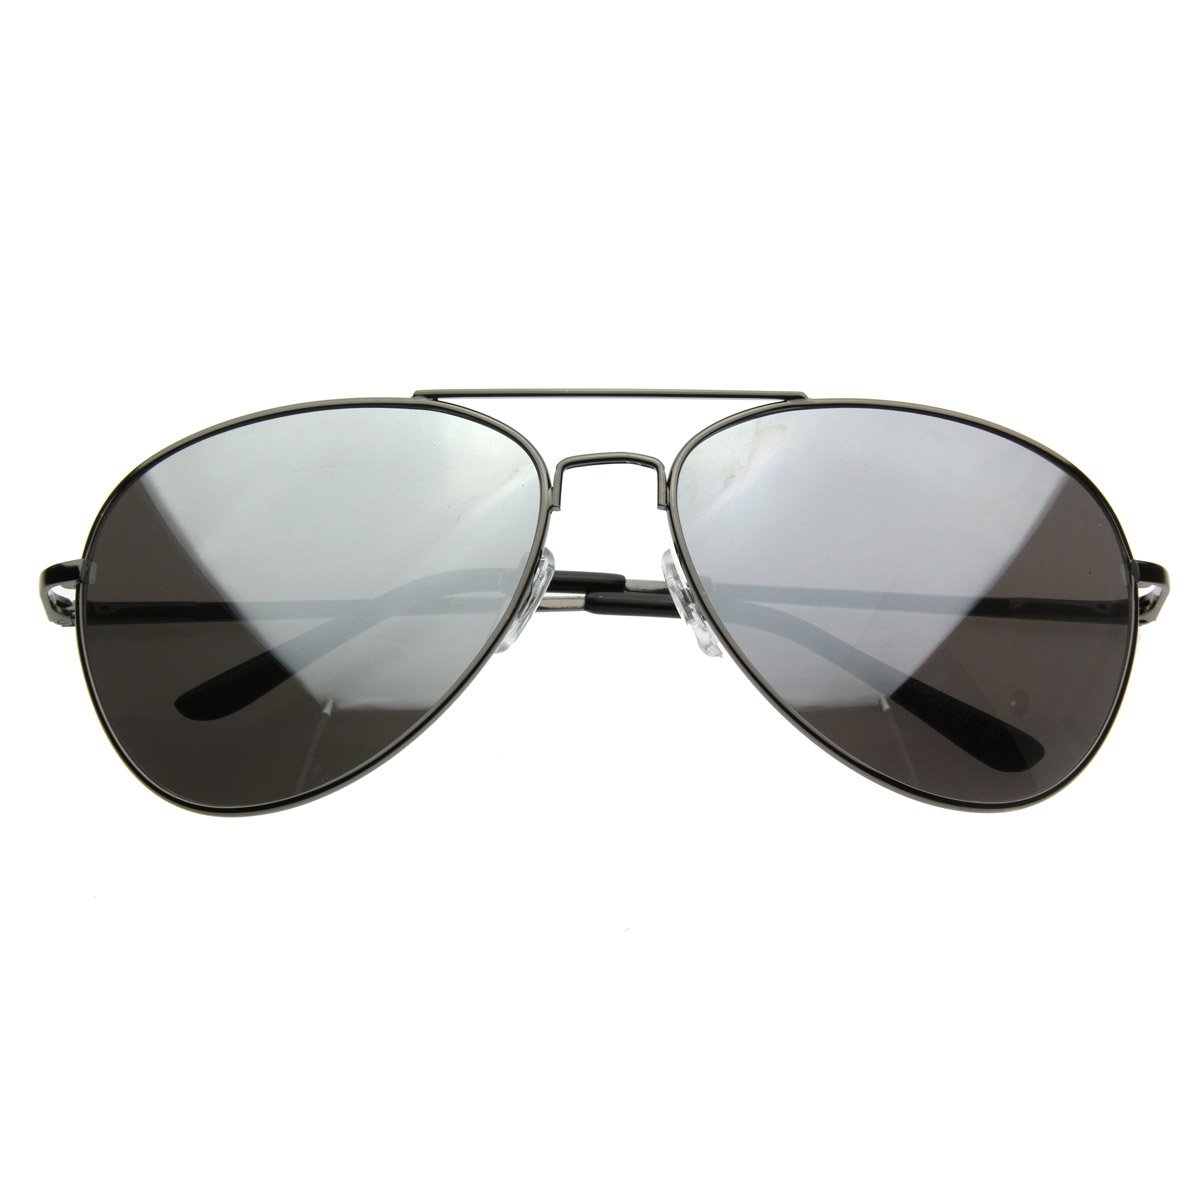 Premium Mirrored Aviator Top Gun Sunglasses W/ Spring Loaded Temples - Silver Each